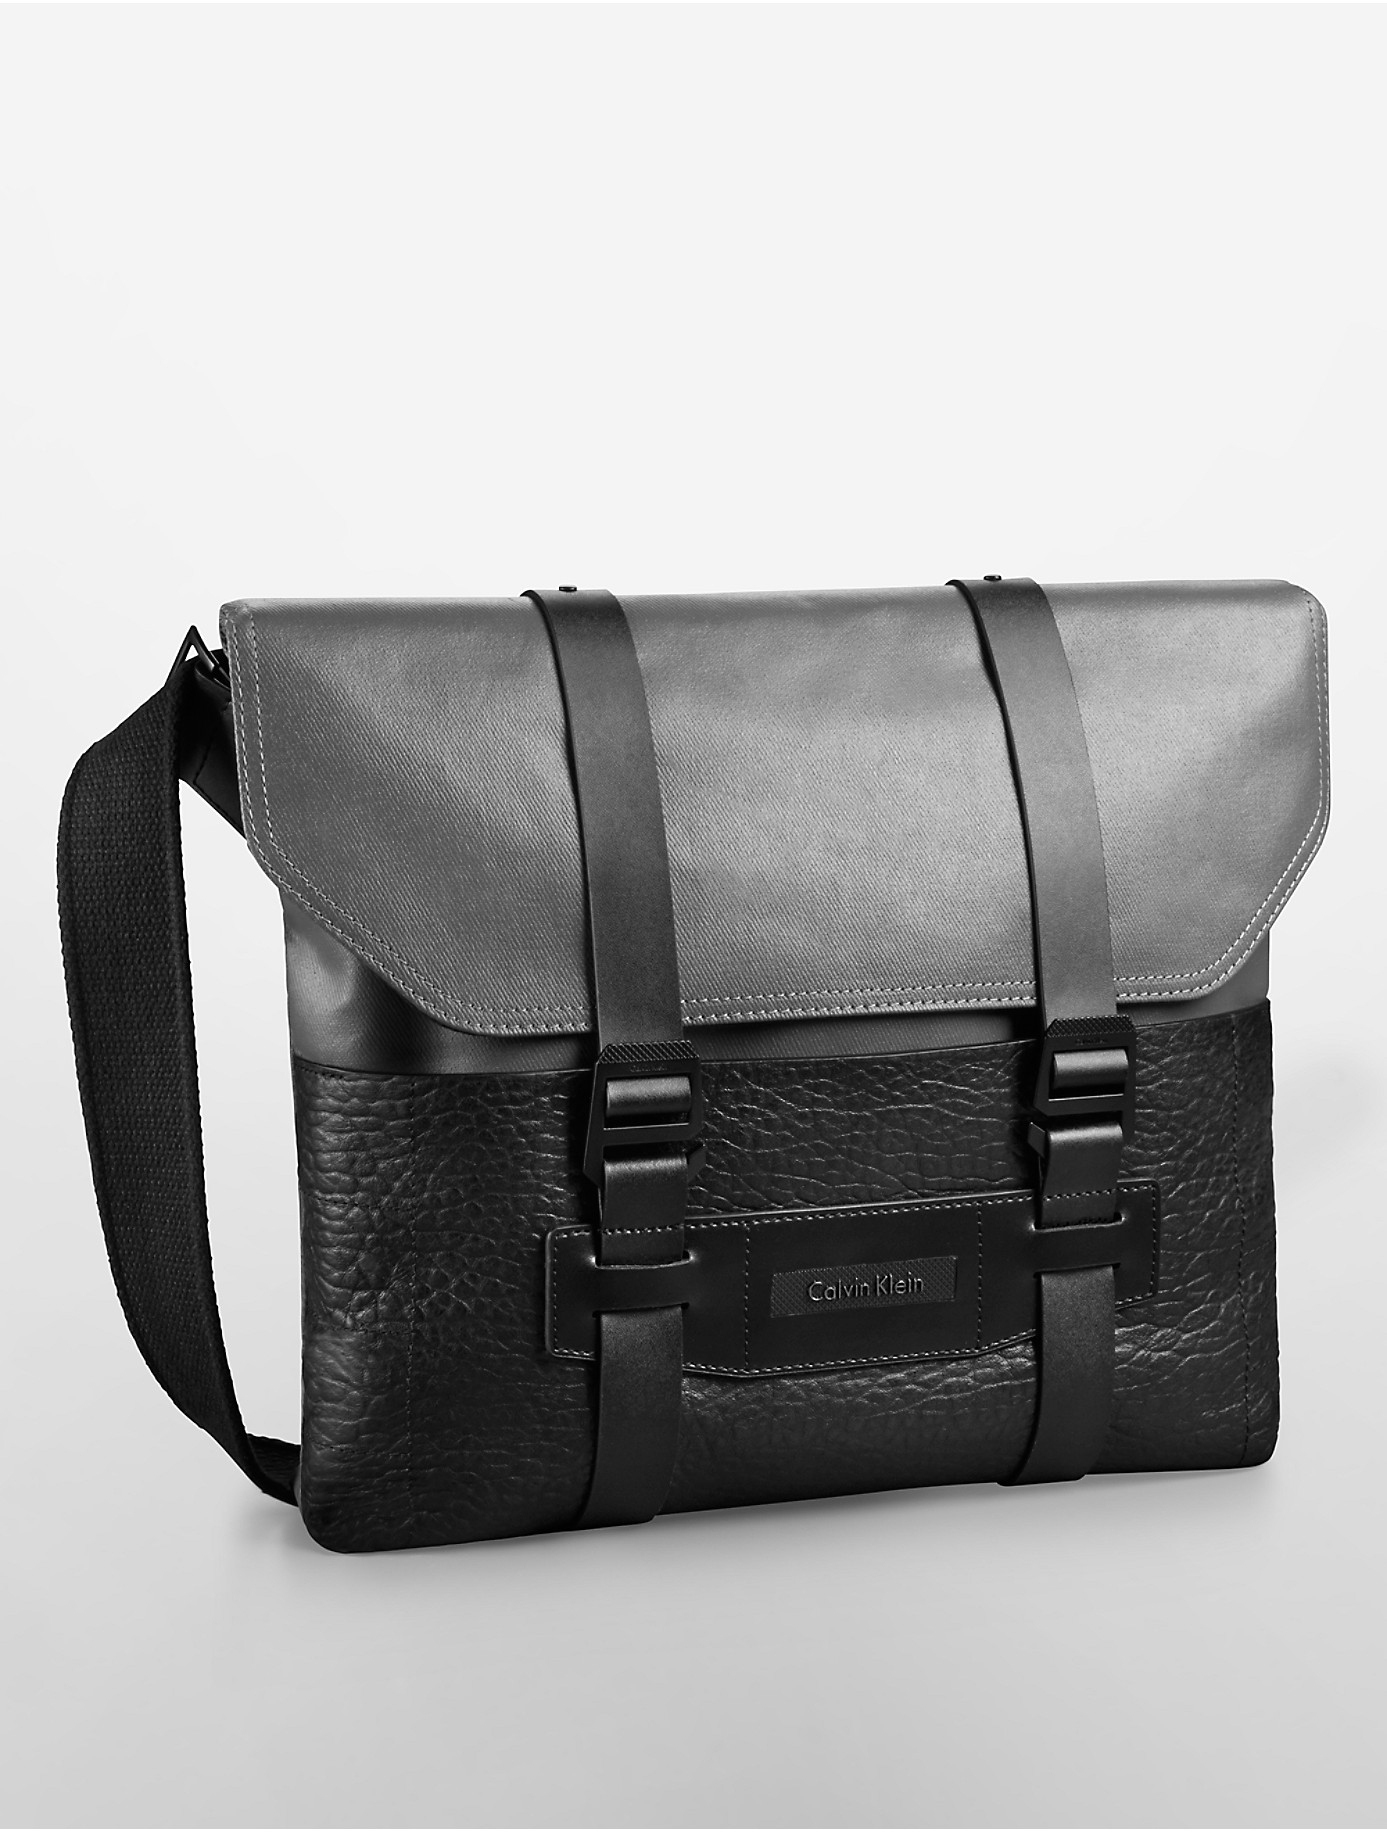 Calvin klein Jeans Leather + Canvas Messenger Bag in Black for Men | Lyst